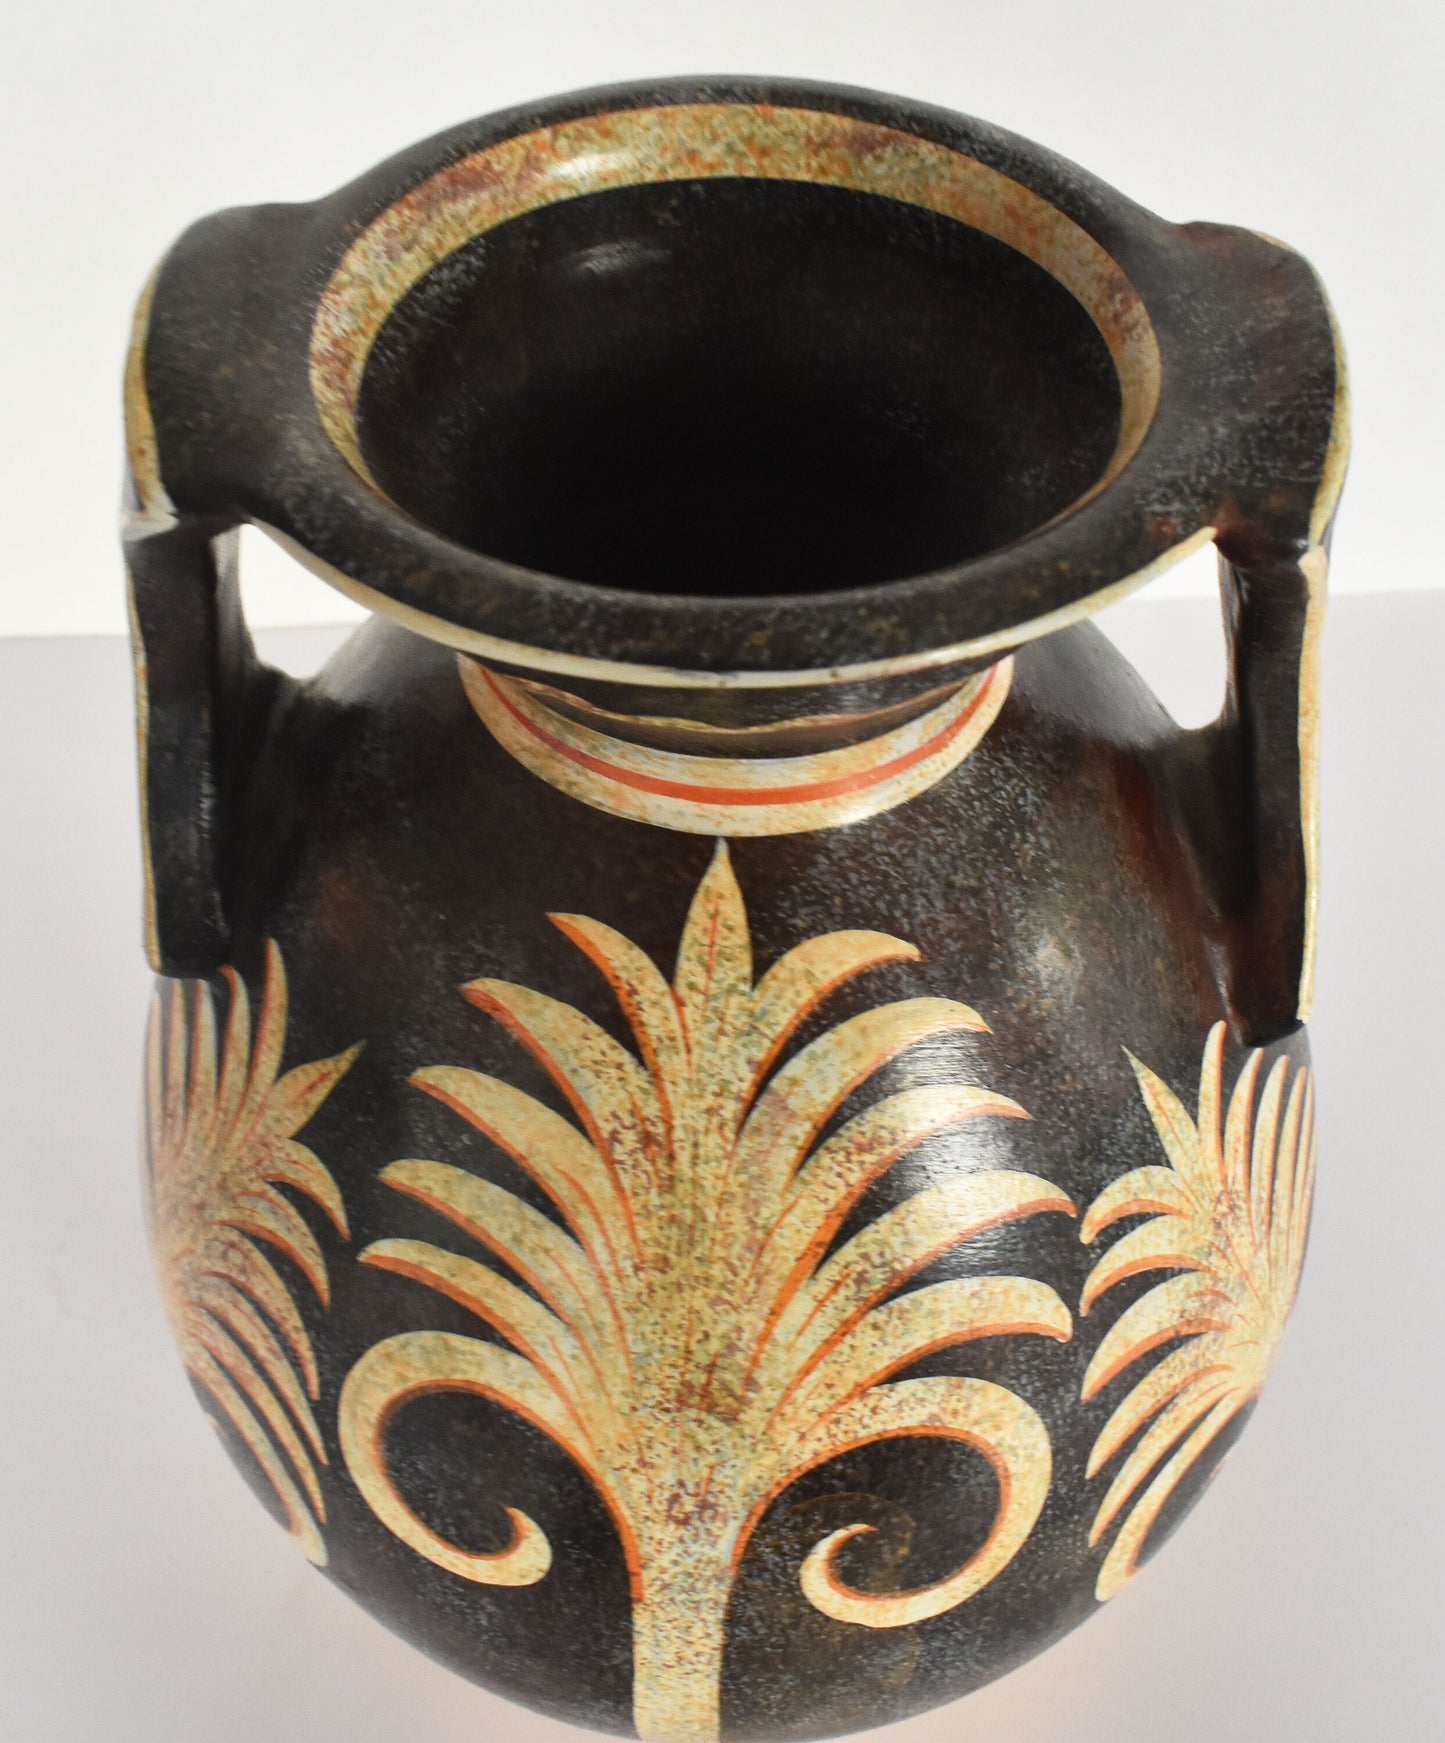 Amphora - White and Red Palm Trees on Black - Kamares ware - Minoan - 1800-1750 BC - Crete - Ceramic Vase